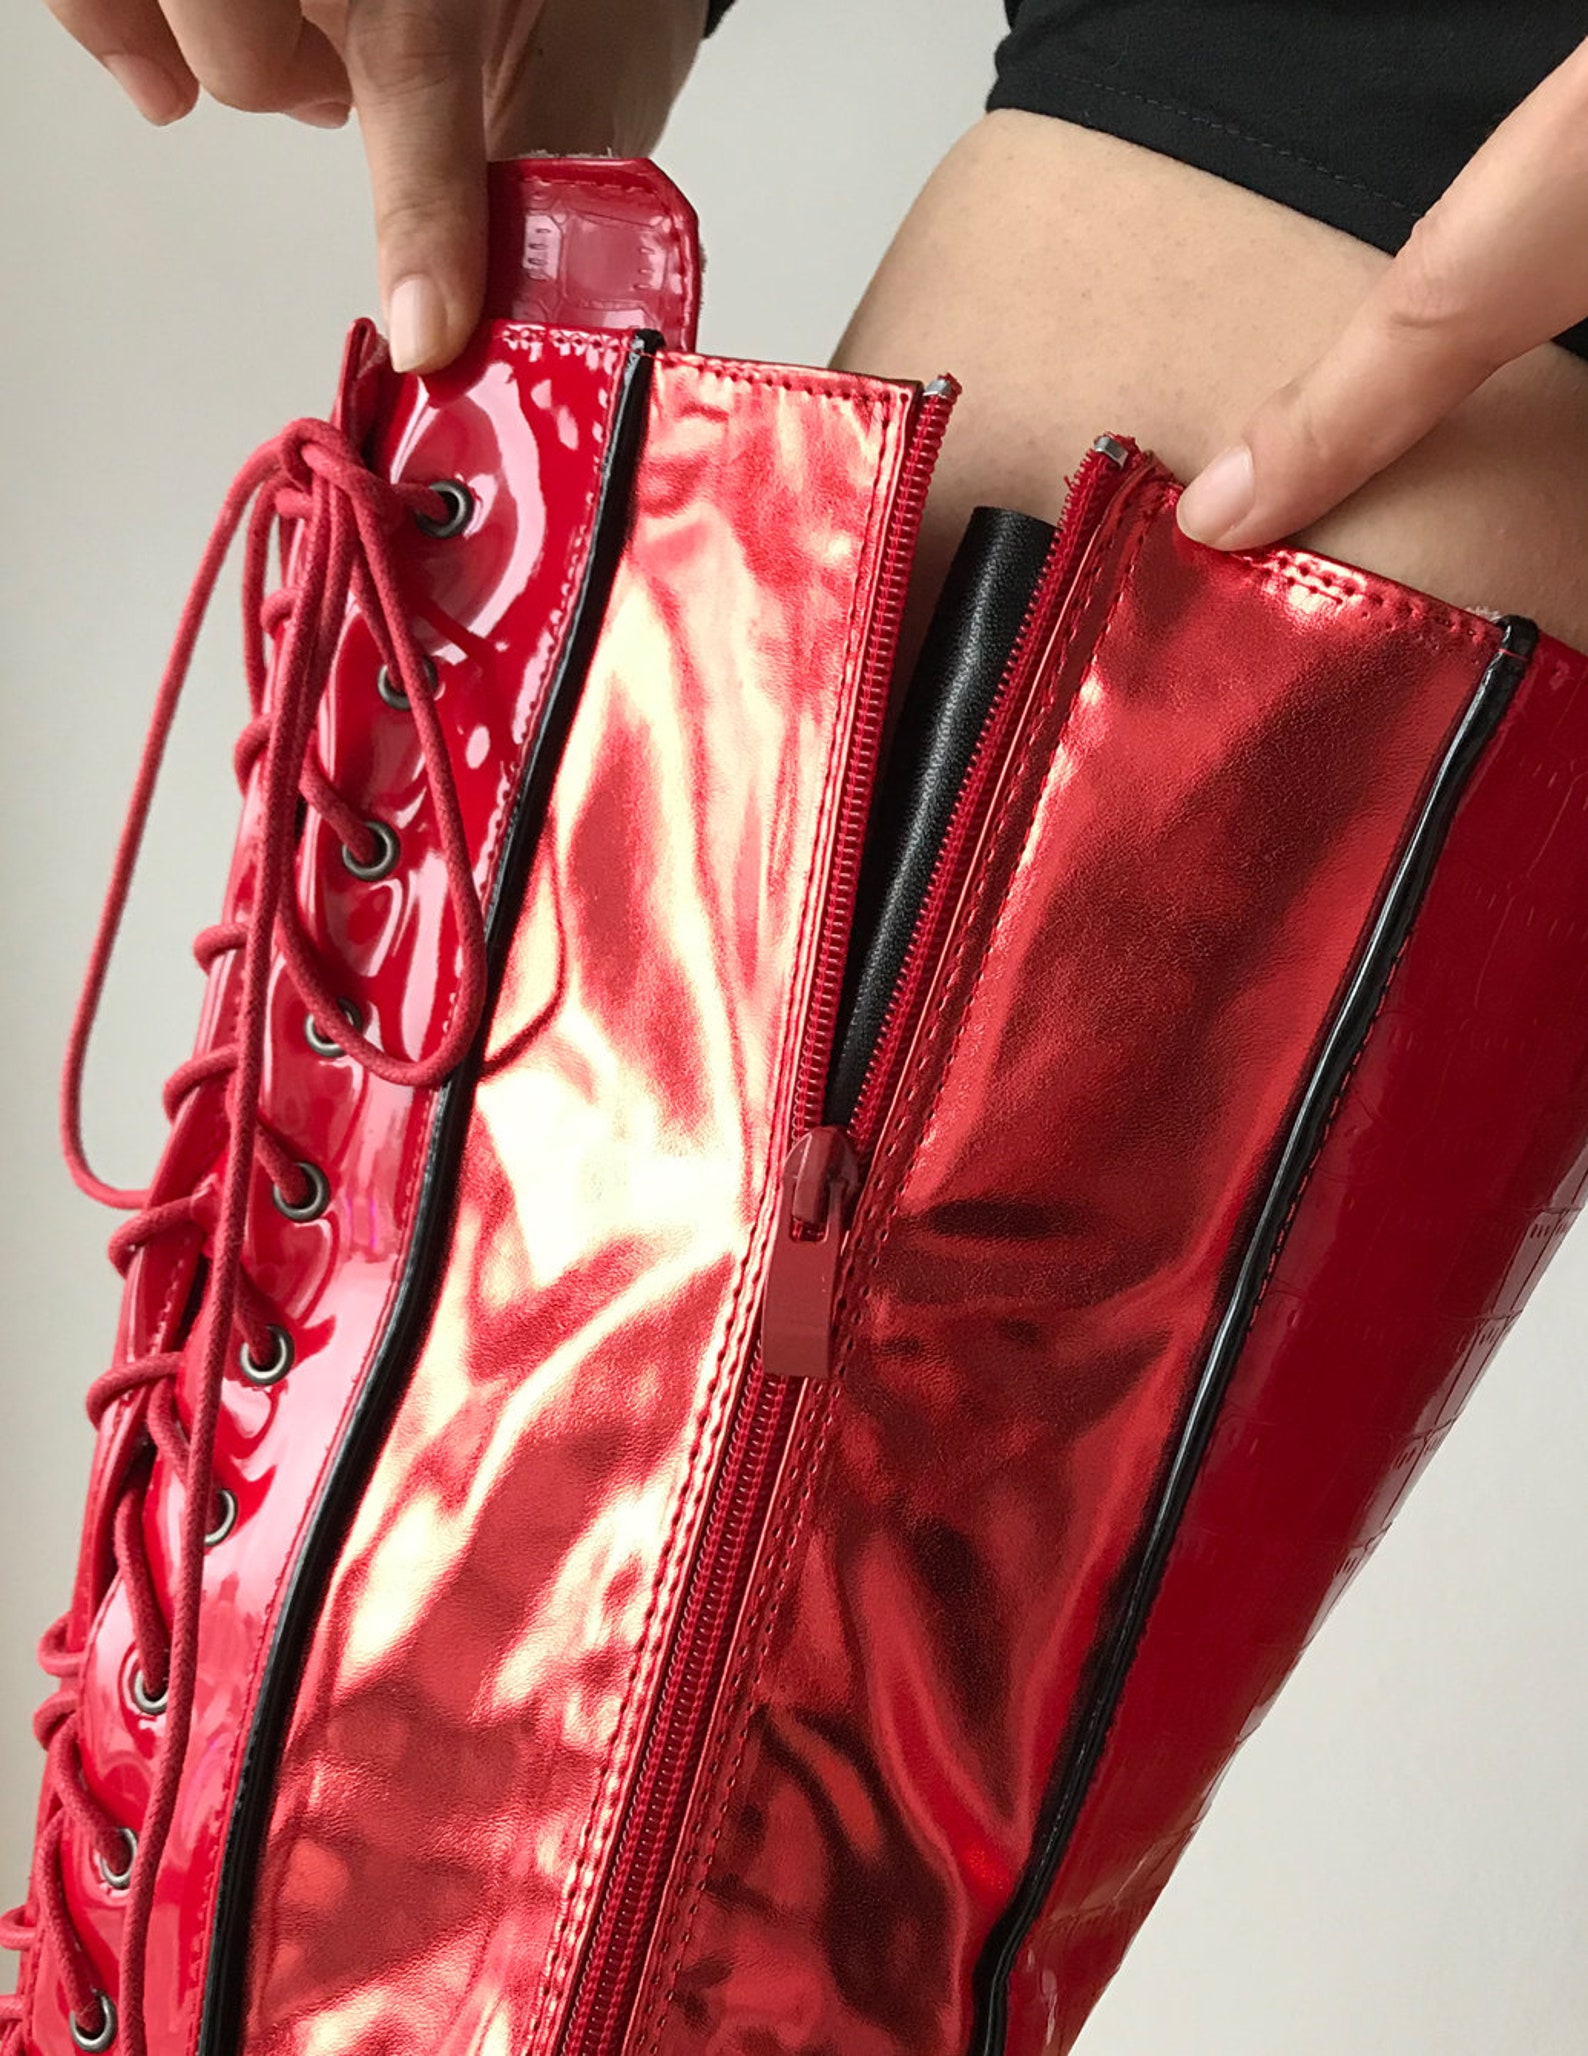 RTBU KINKY Boots 15cm Spool Platform Goth Crotch Lace Zip Red | Etsy